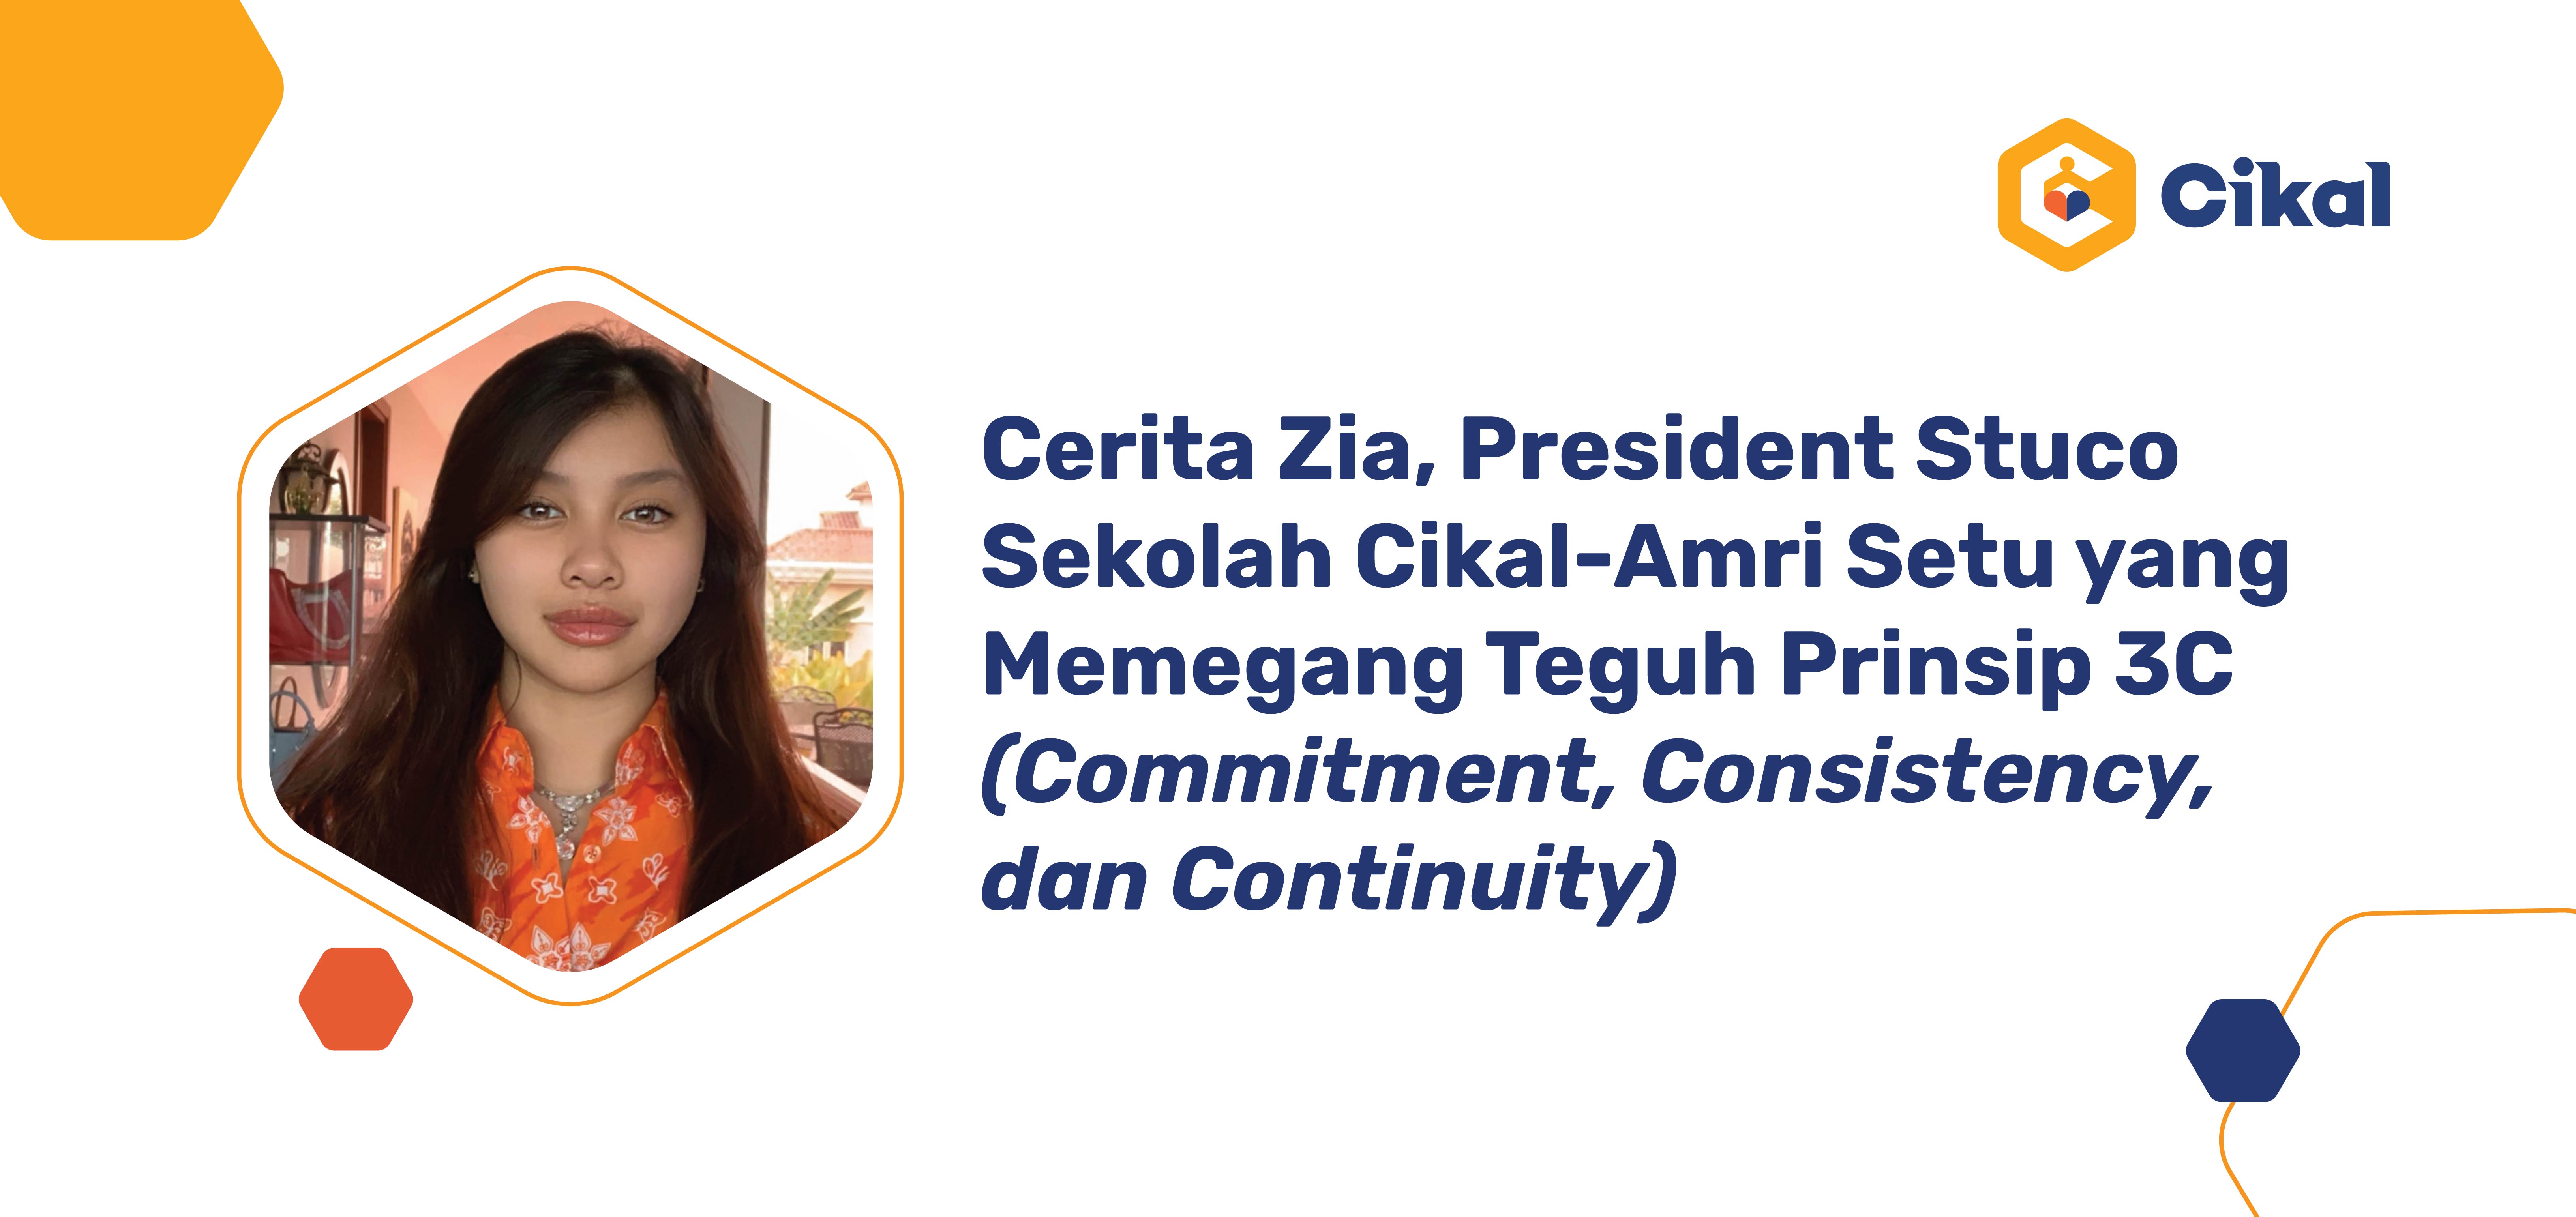 Cerita Zia, President Stuco Sekolah Cikal-Amri Setu yang Memegang Teguh Prinsip 3C (Commitment, Consistency, dan Continuity)